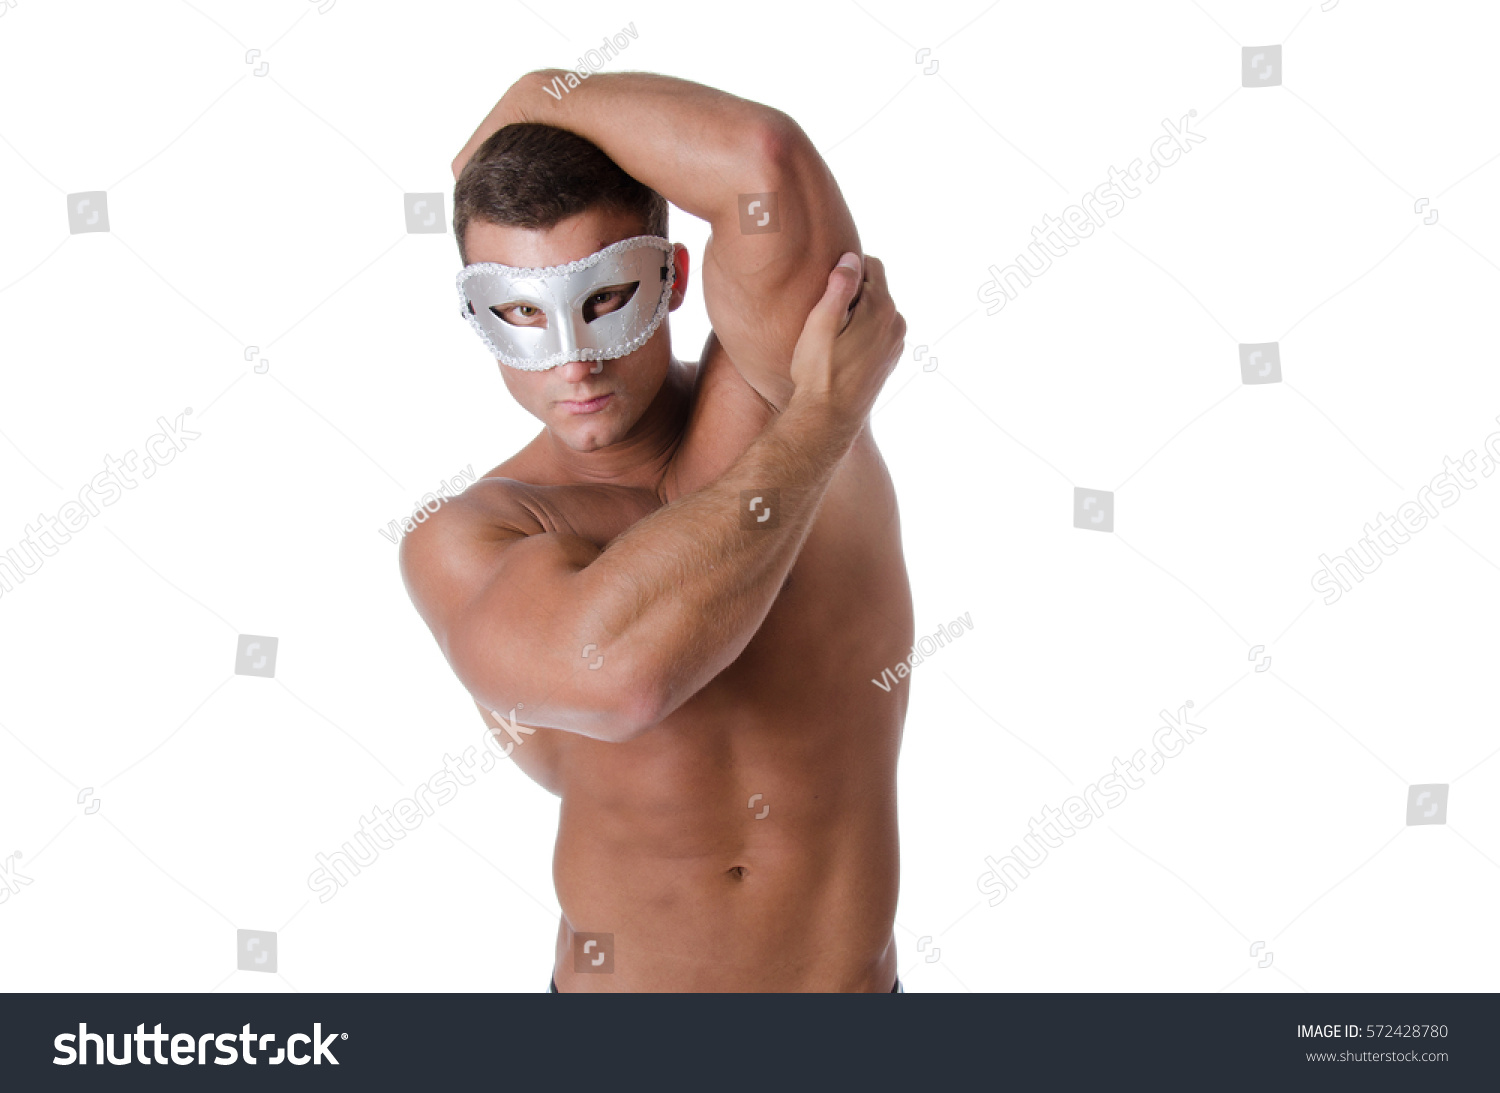 Nude photos the boy mask - These Incredible